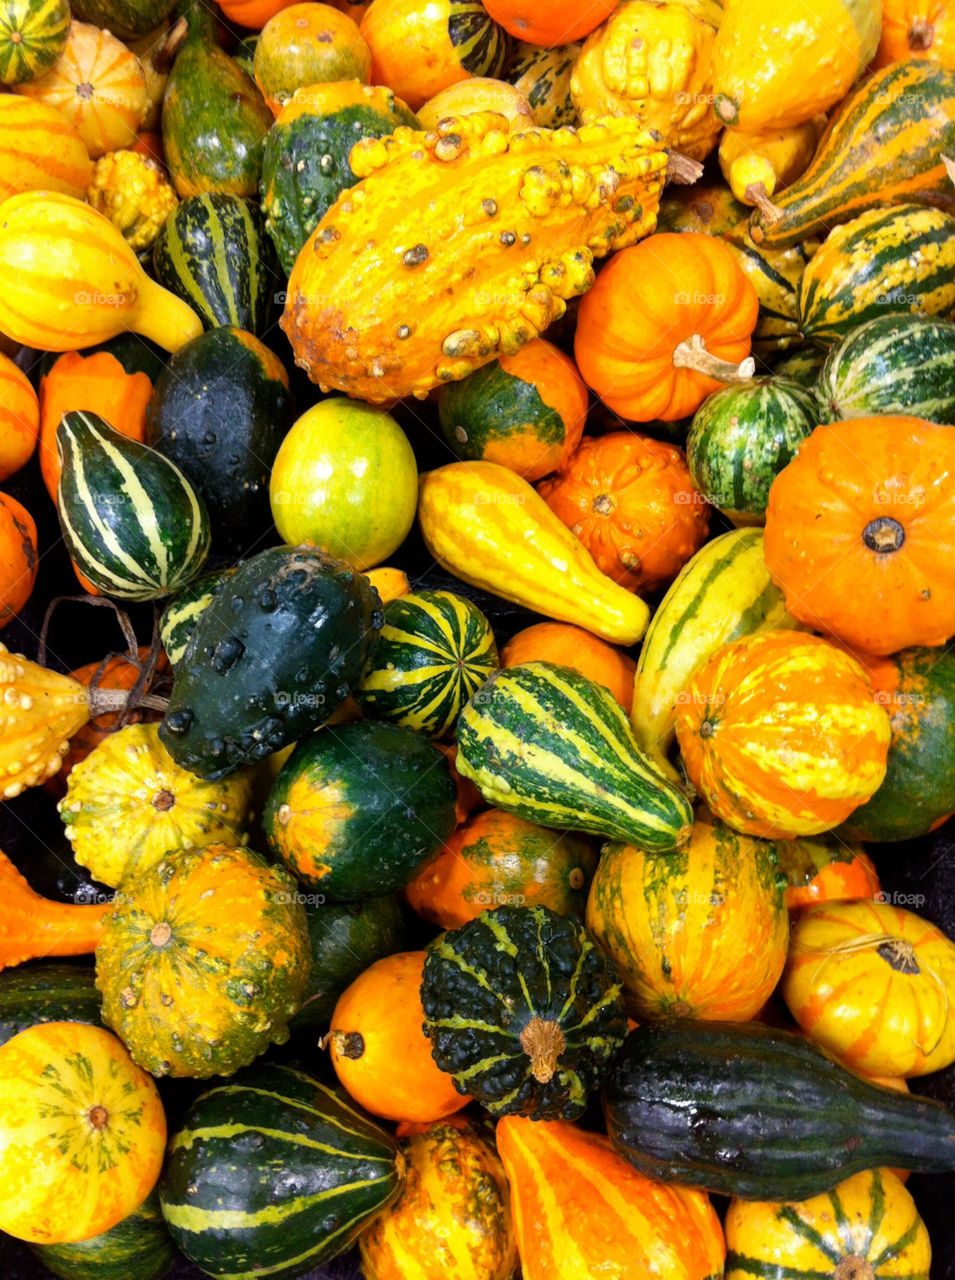 Squash and pumpkins during the fall season.